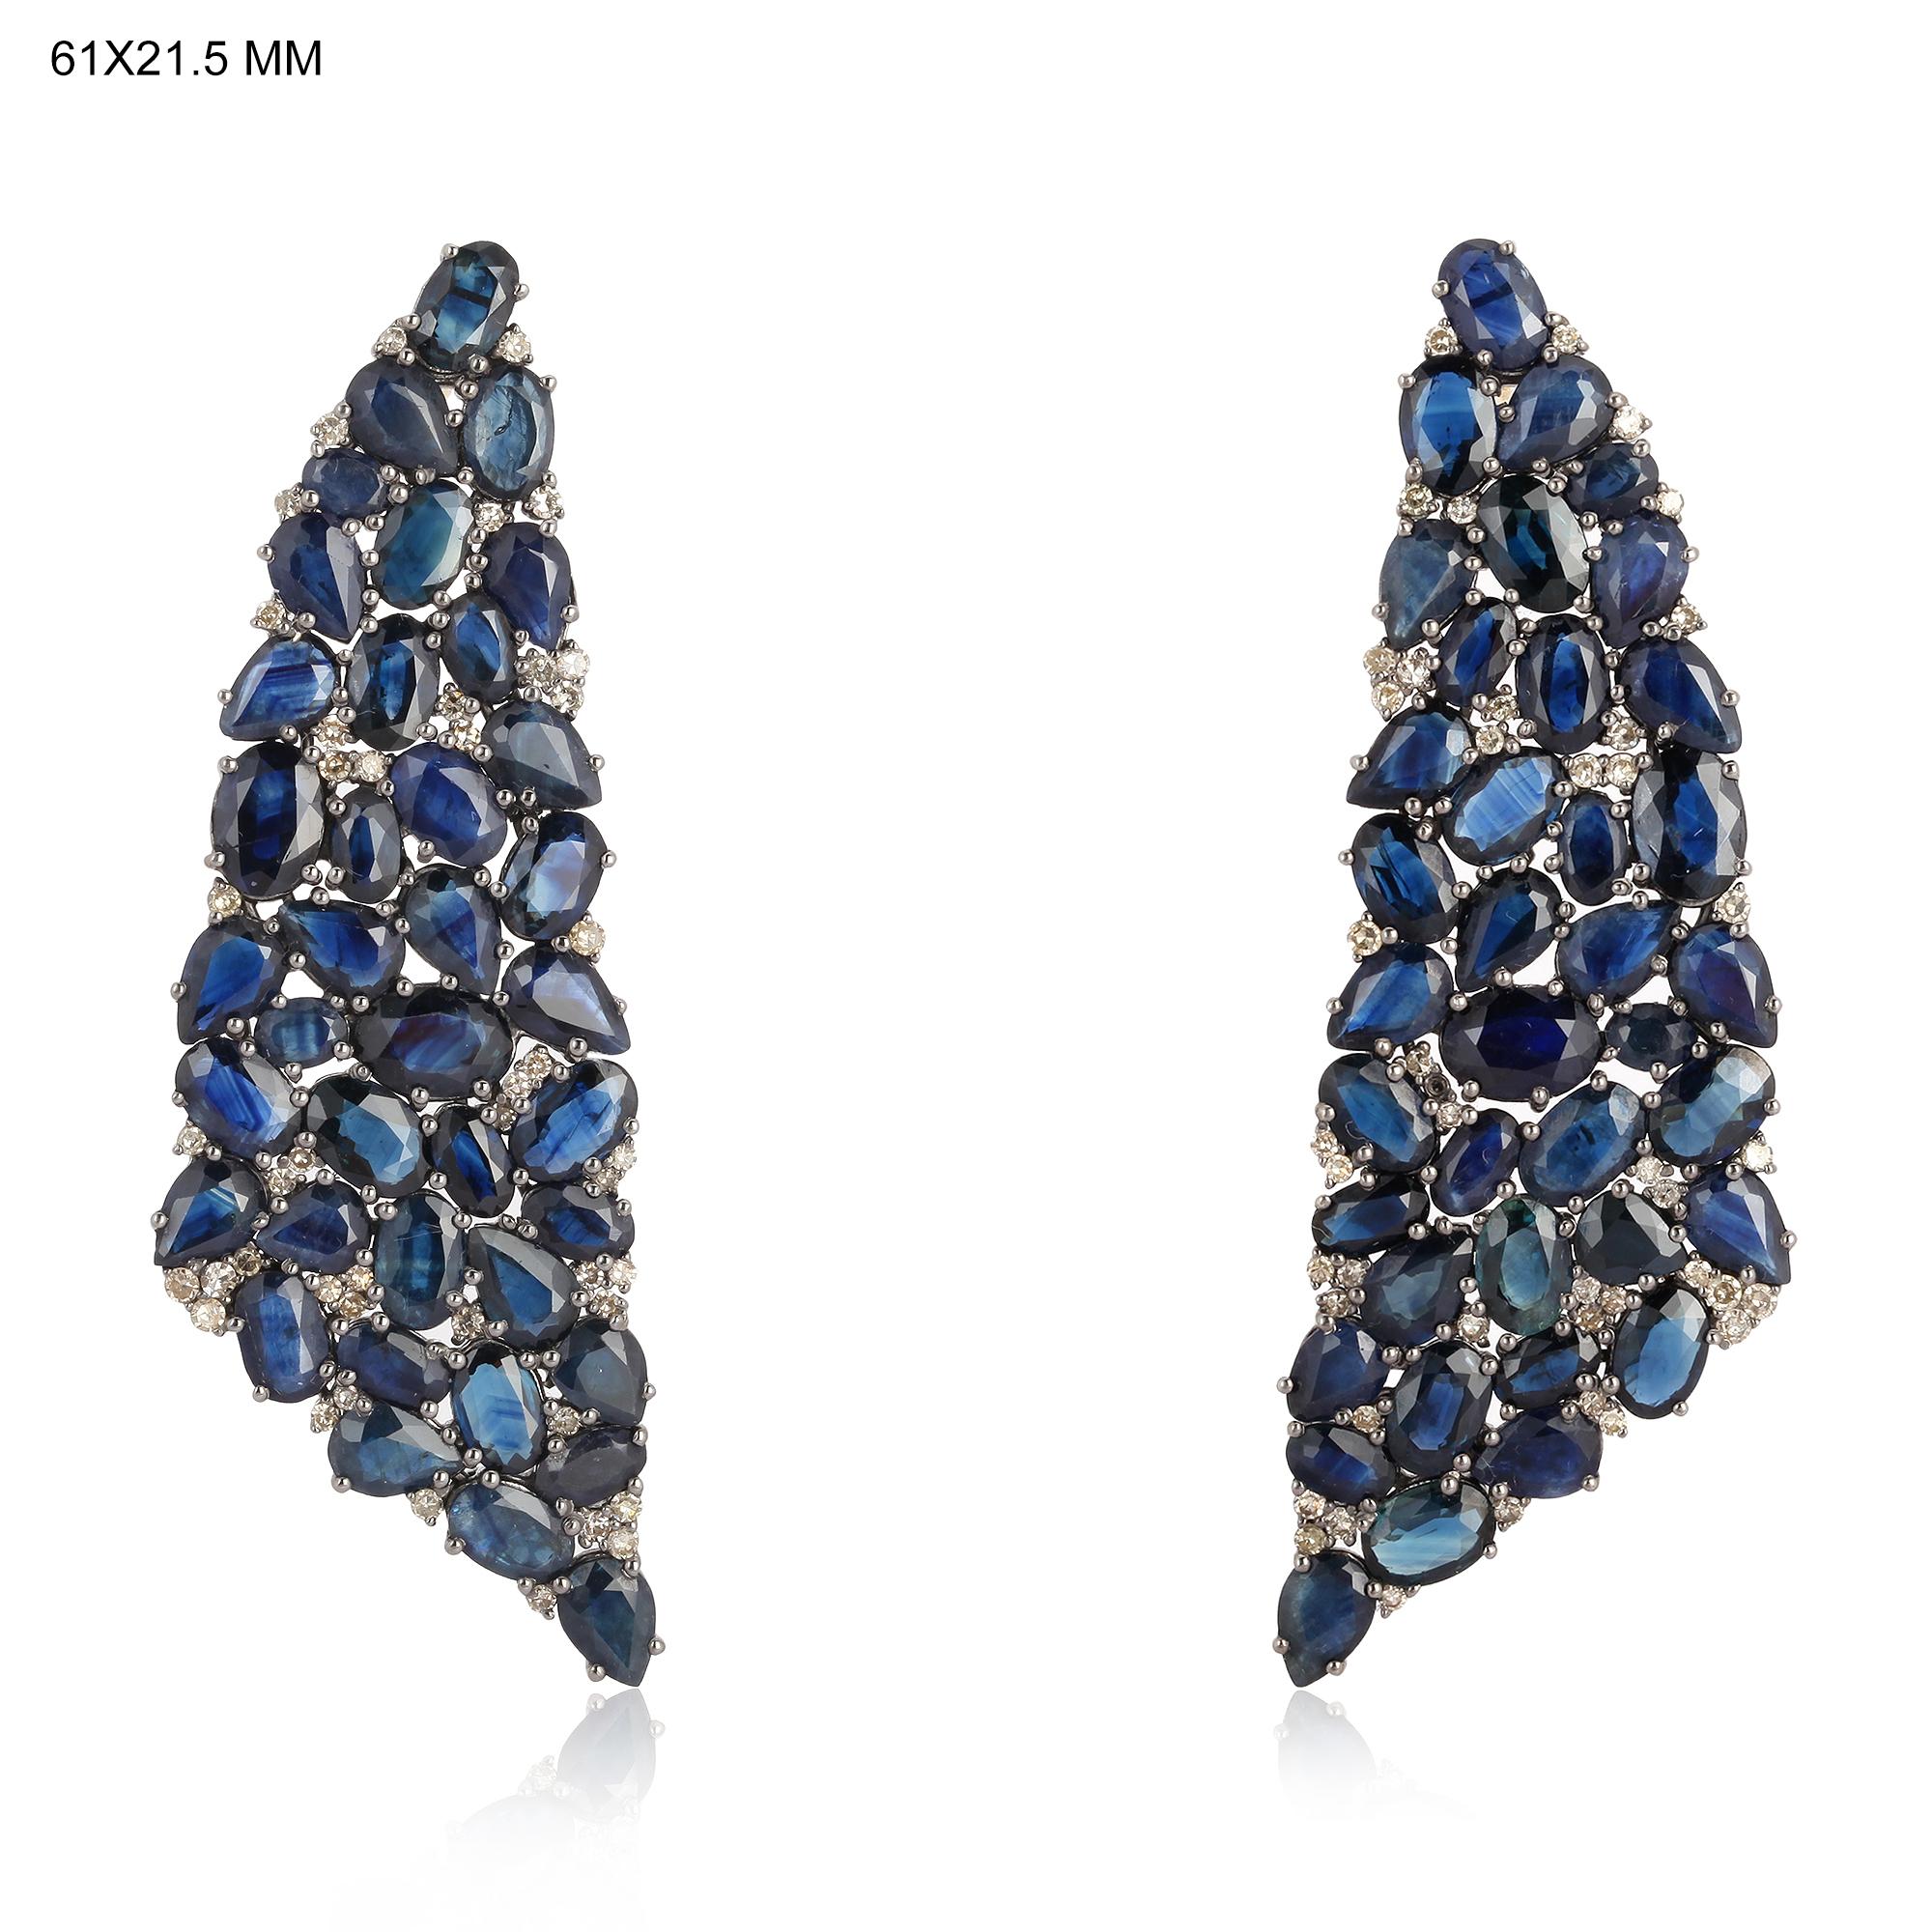 Mixed Cut 33.21 Carat Blue Sapphire Diamond Earrings For Sale